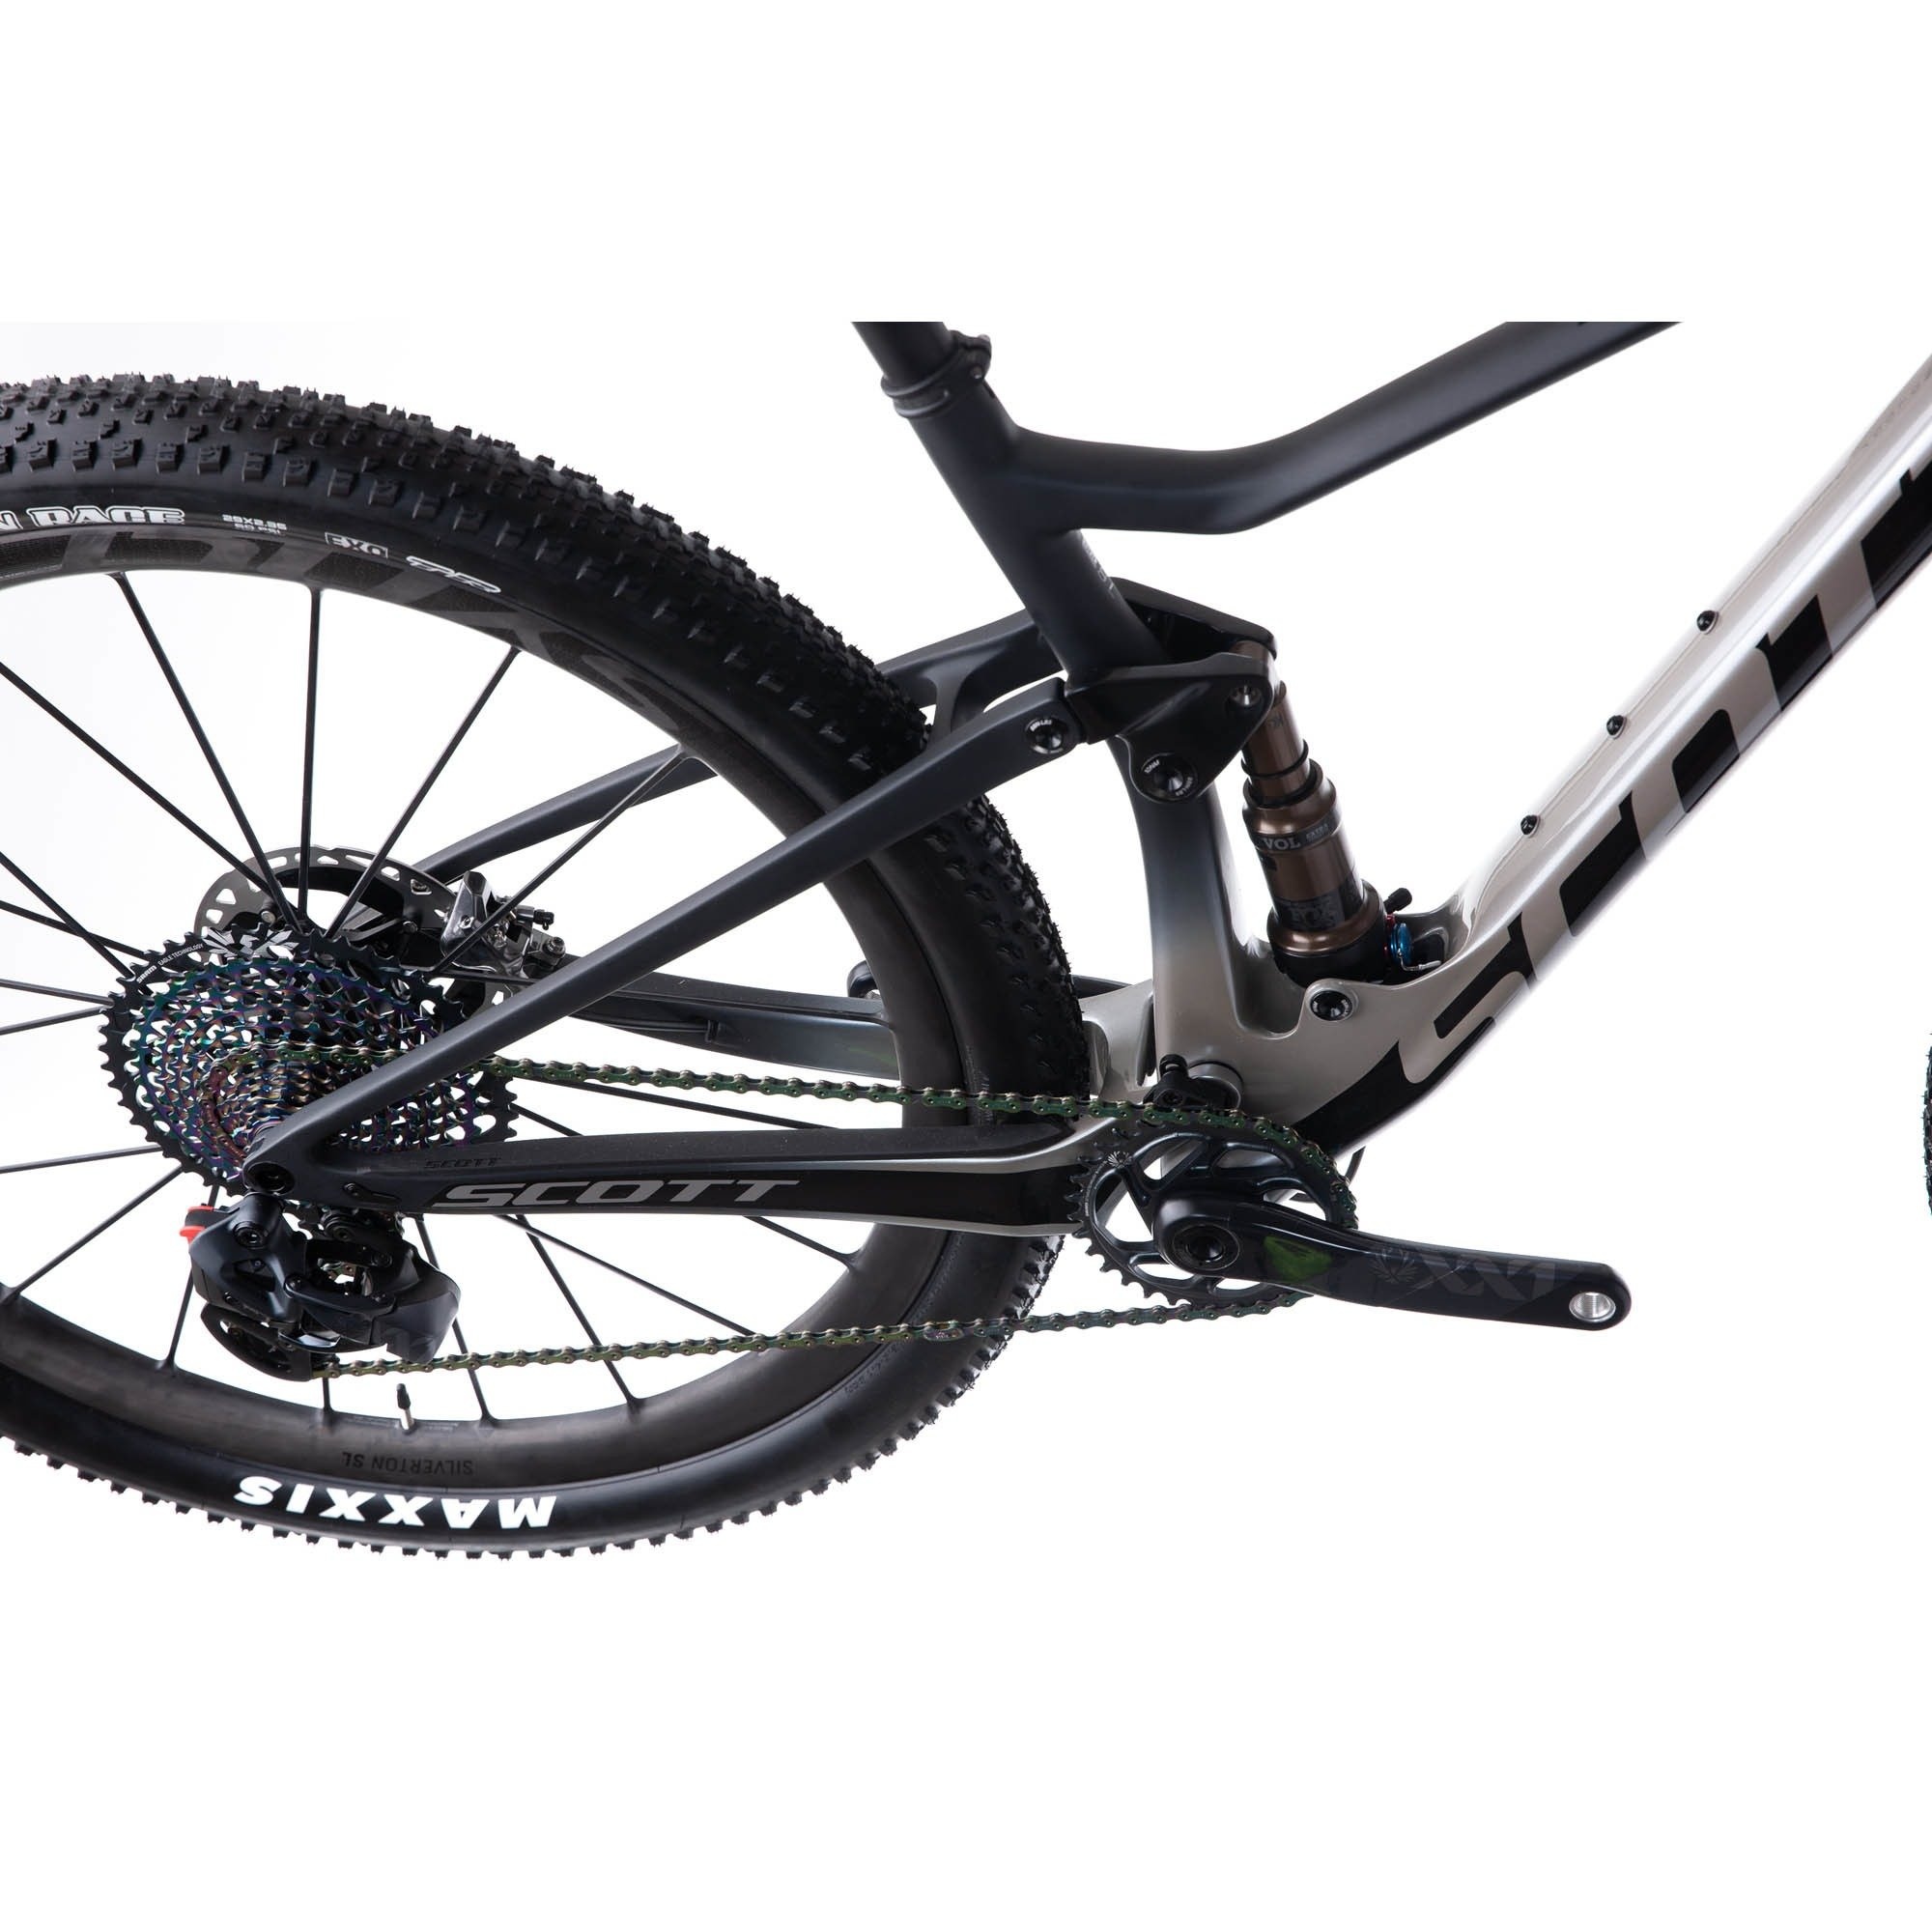 Cykler - Mountainbikes - Scott Spark RC 900 SL AXS 2020 (Udstillingsmodel)